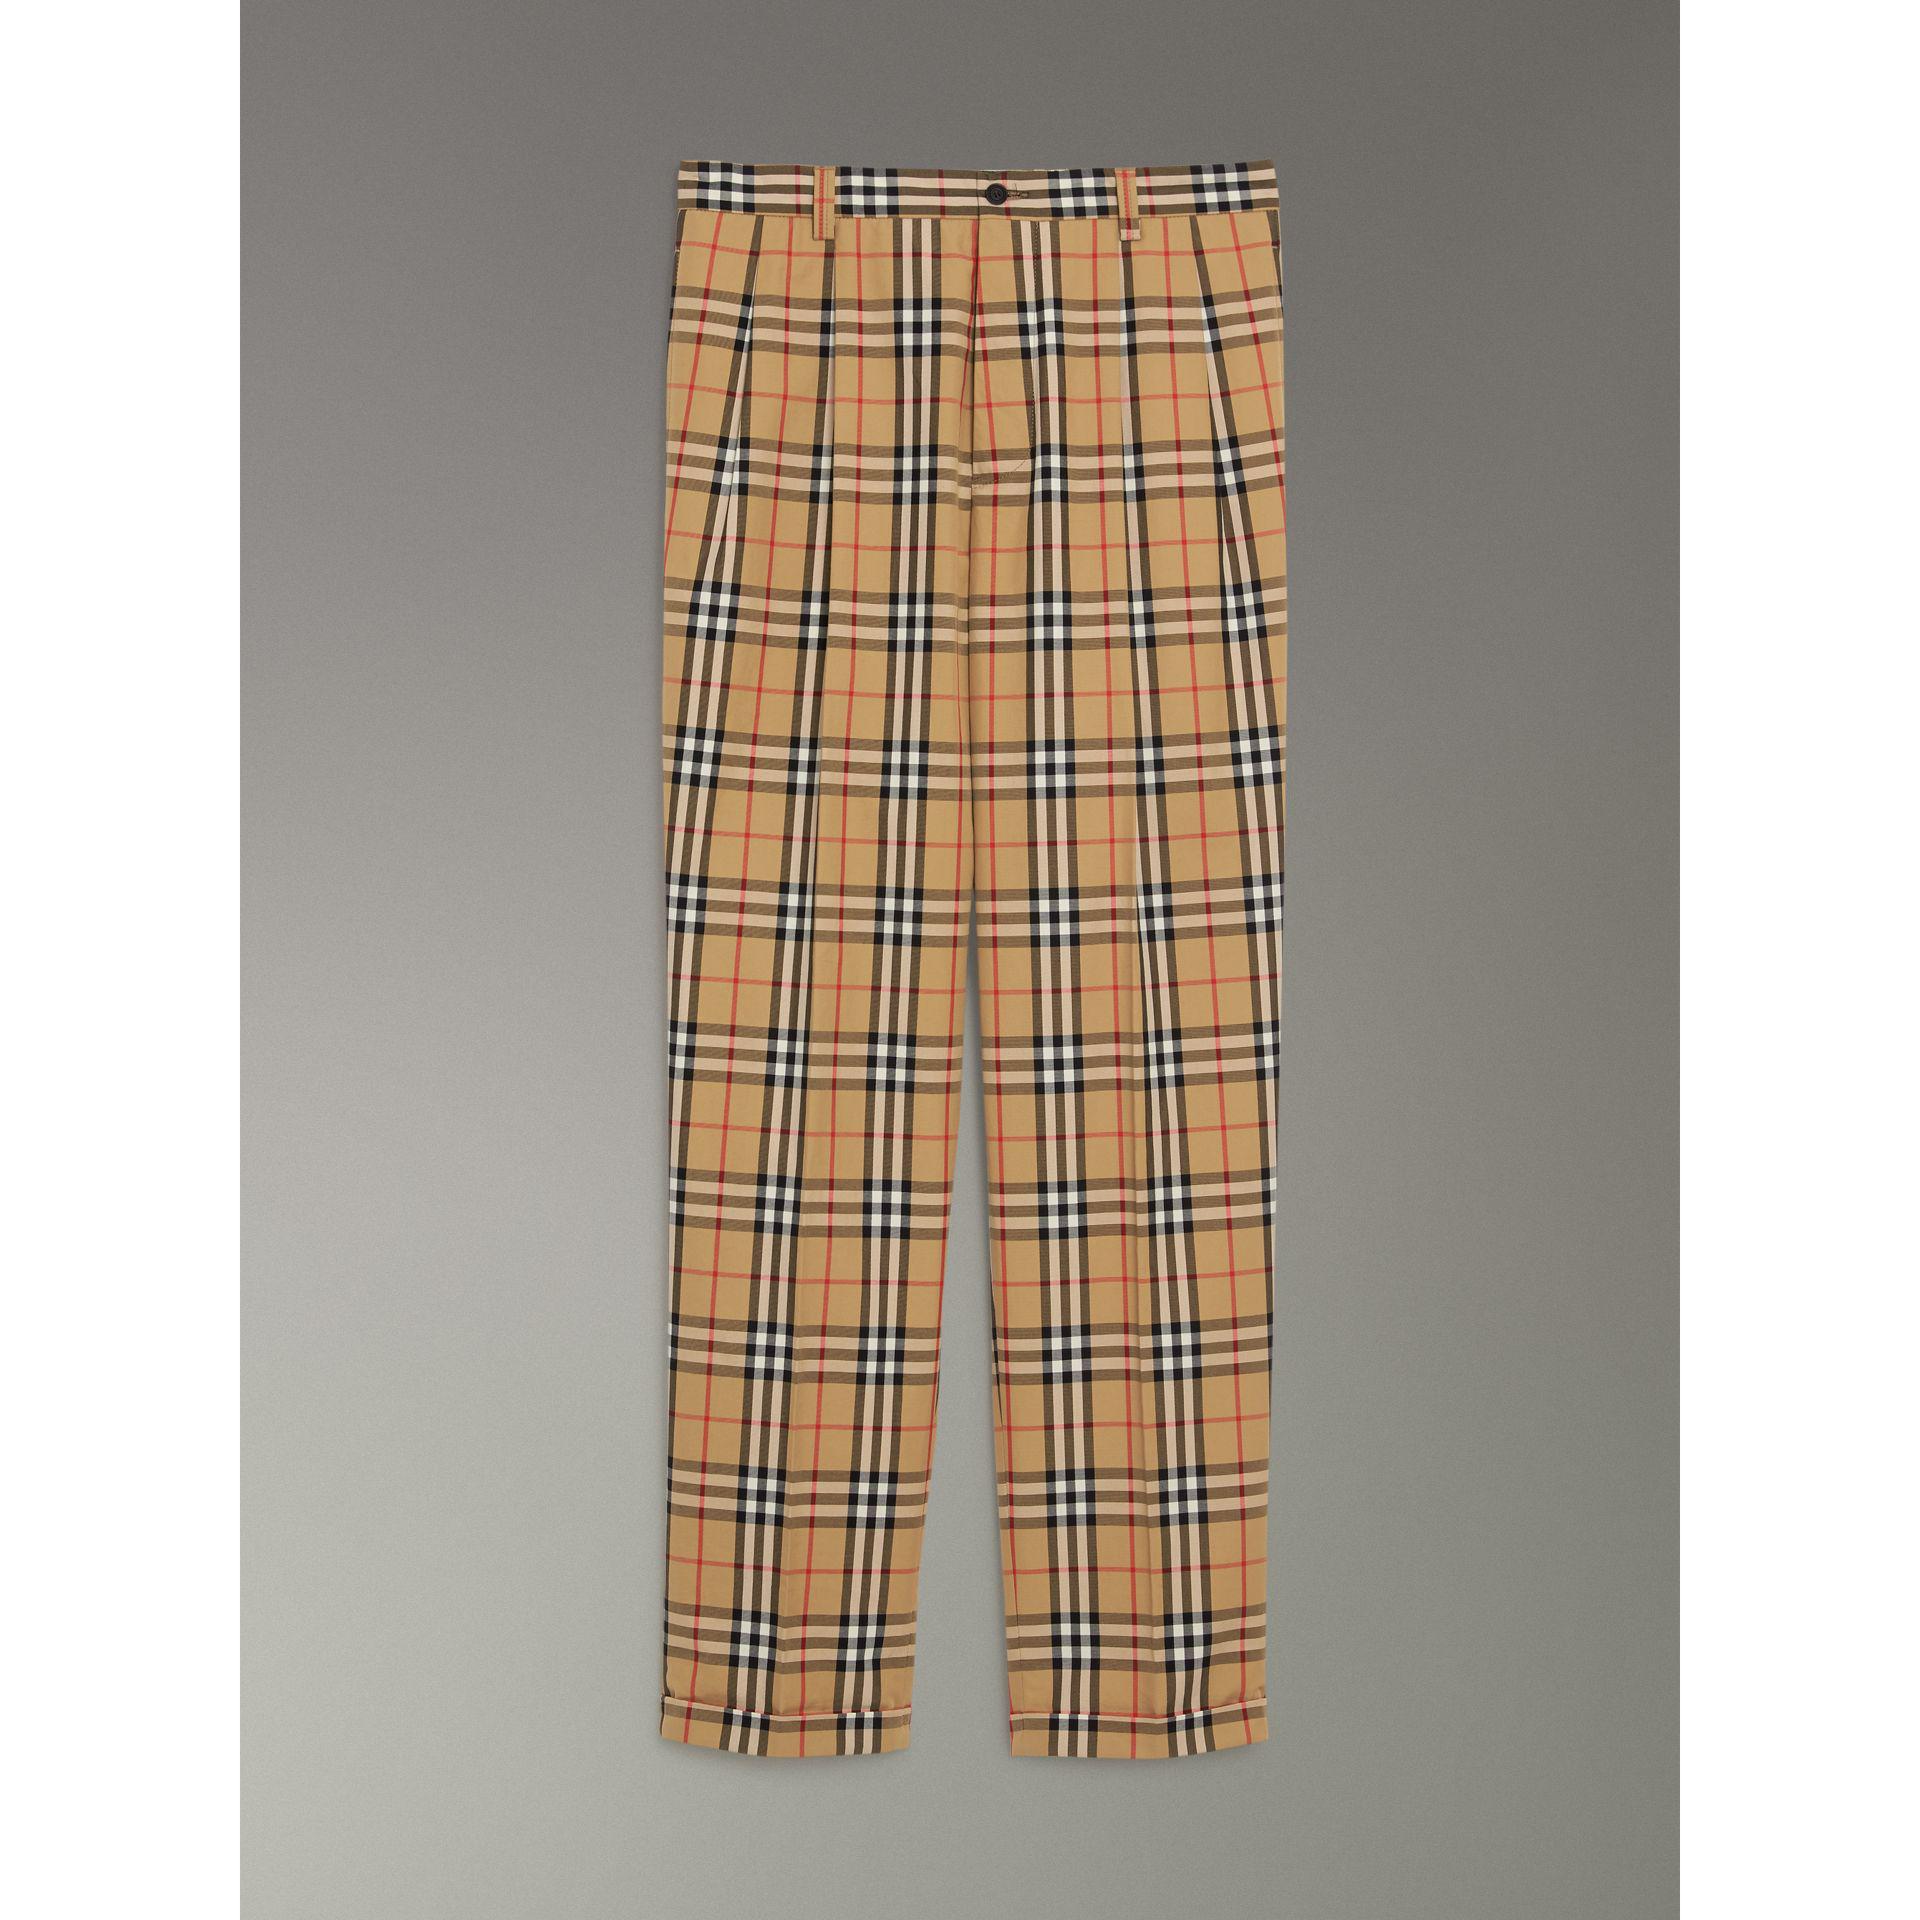 Burberry Vintage Check Cotton Trousers for Men - Lyst